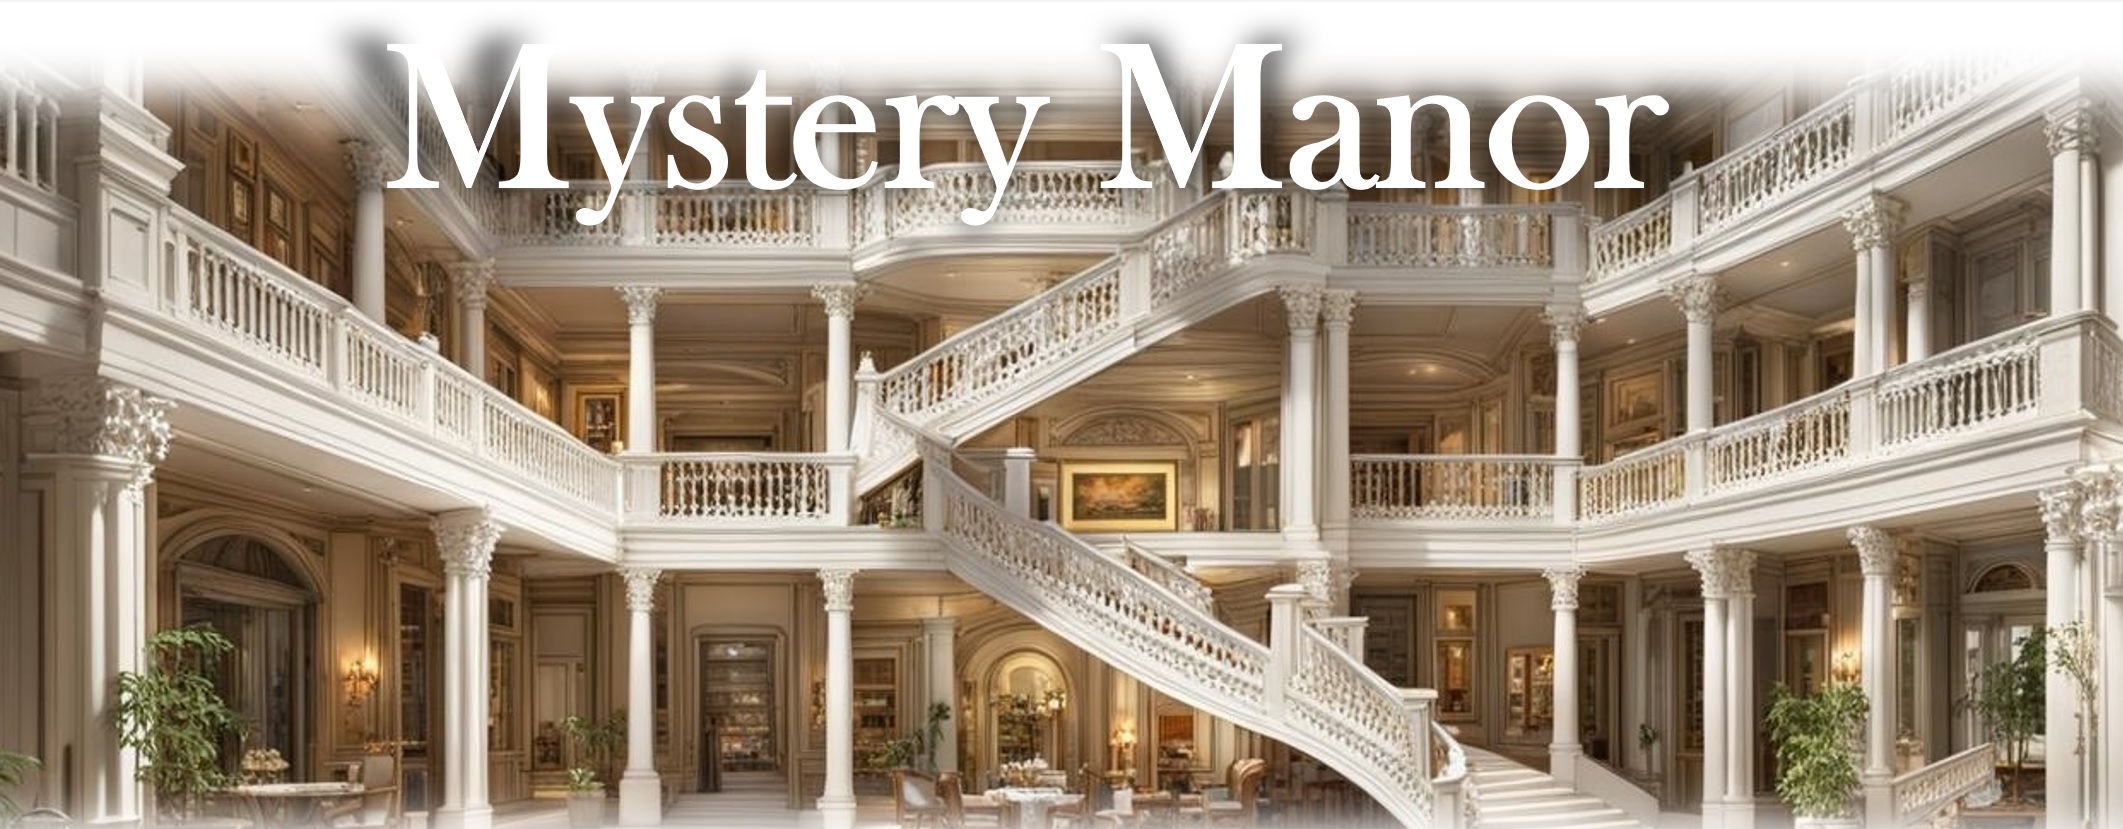 mystery_manor.jpg